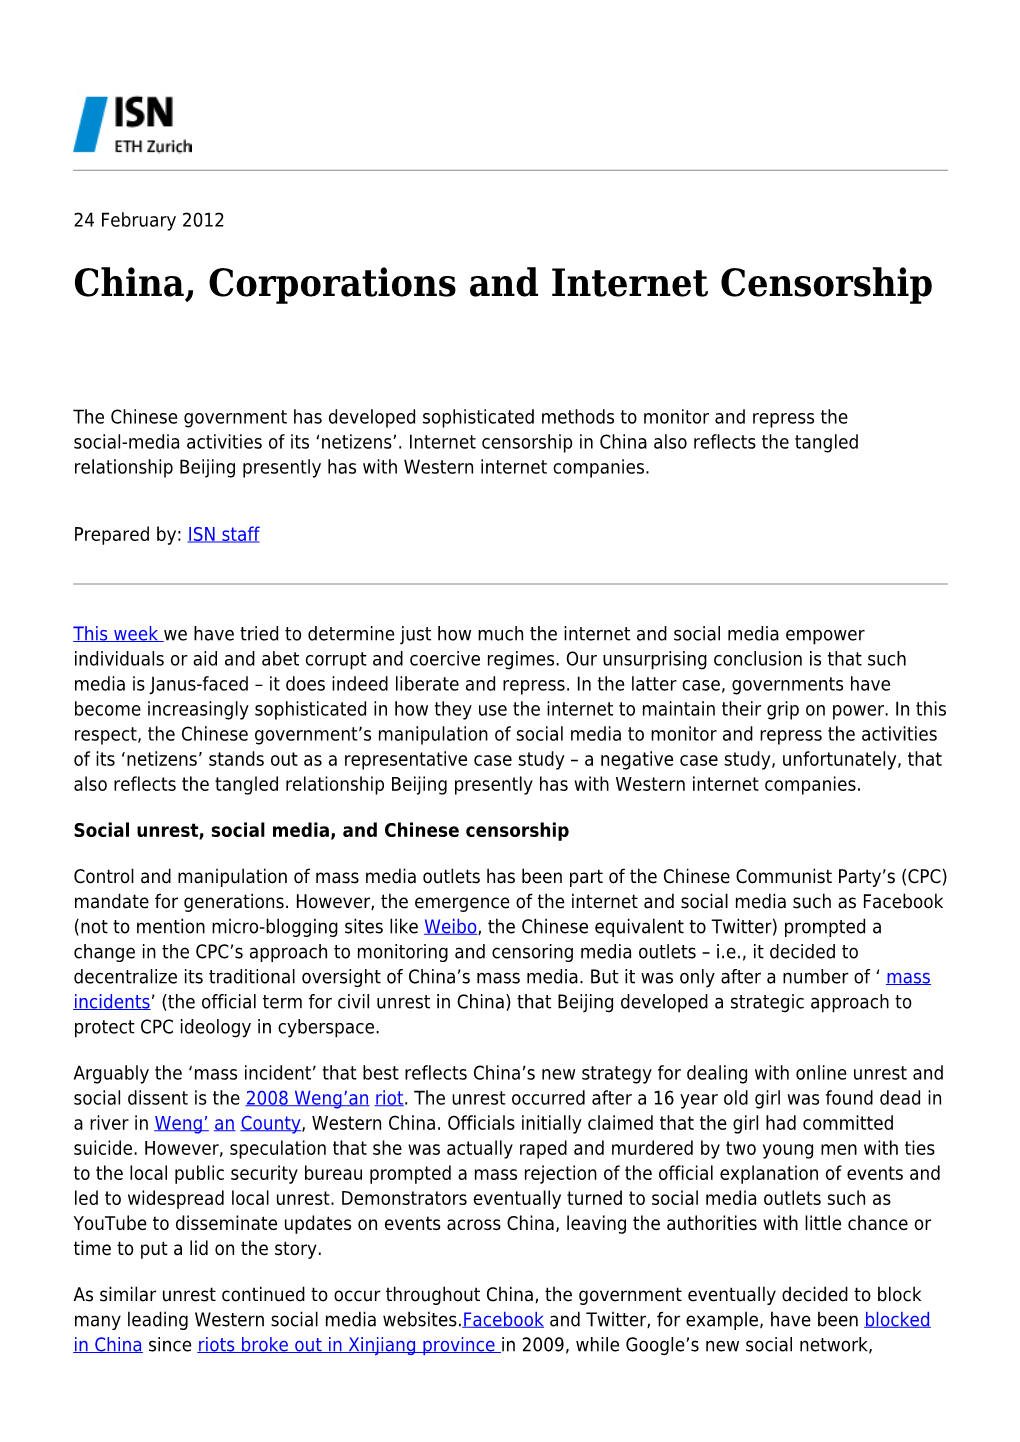 China, Corporations and Internet Censorship